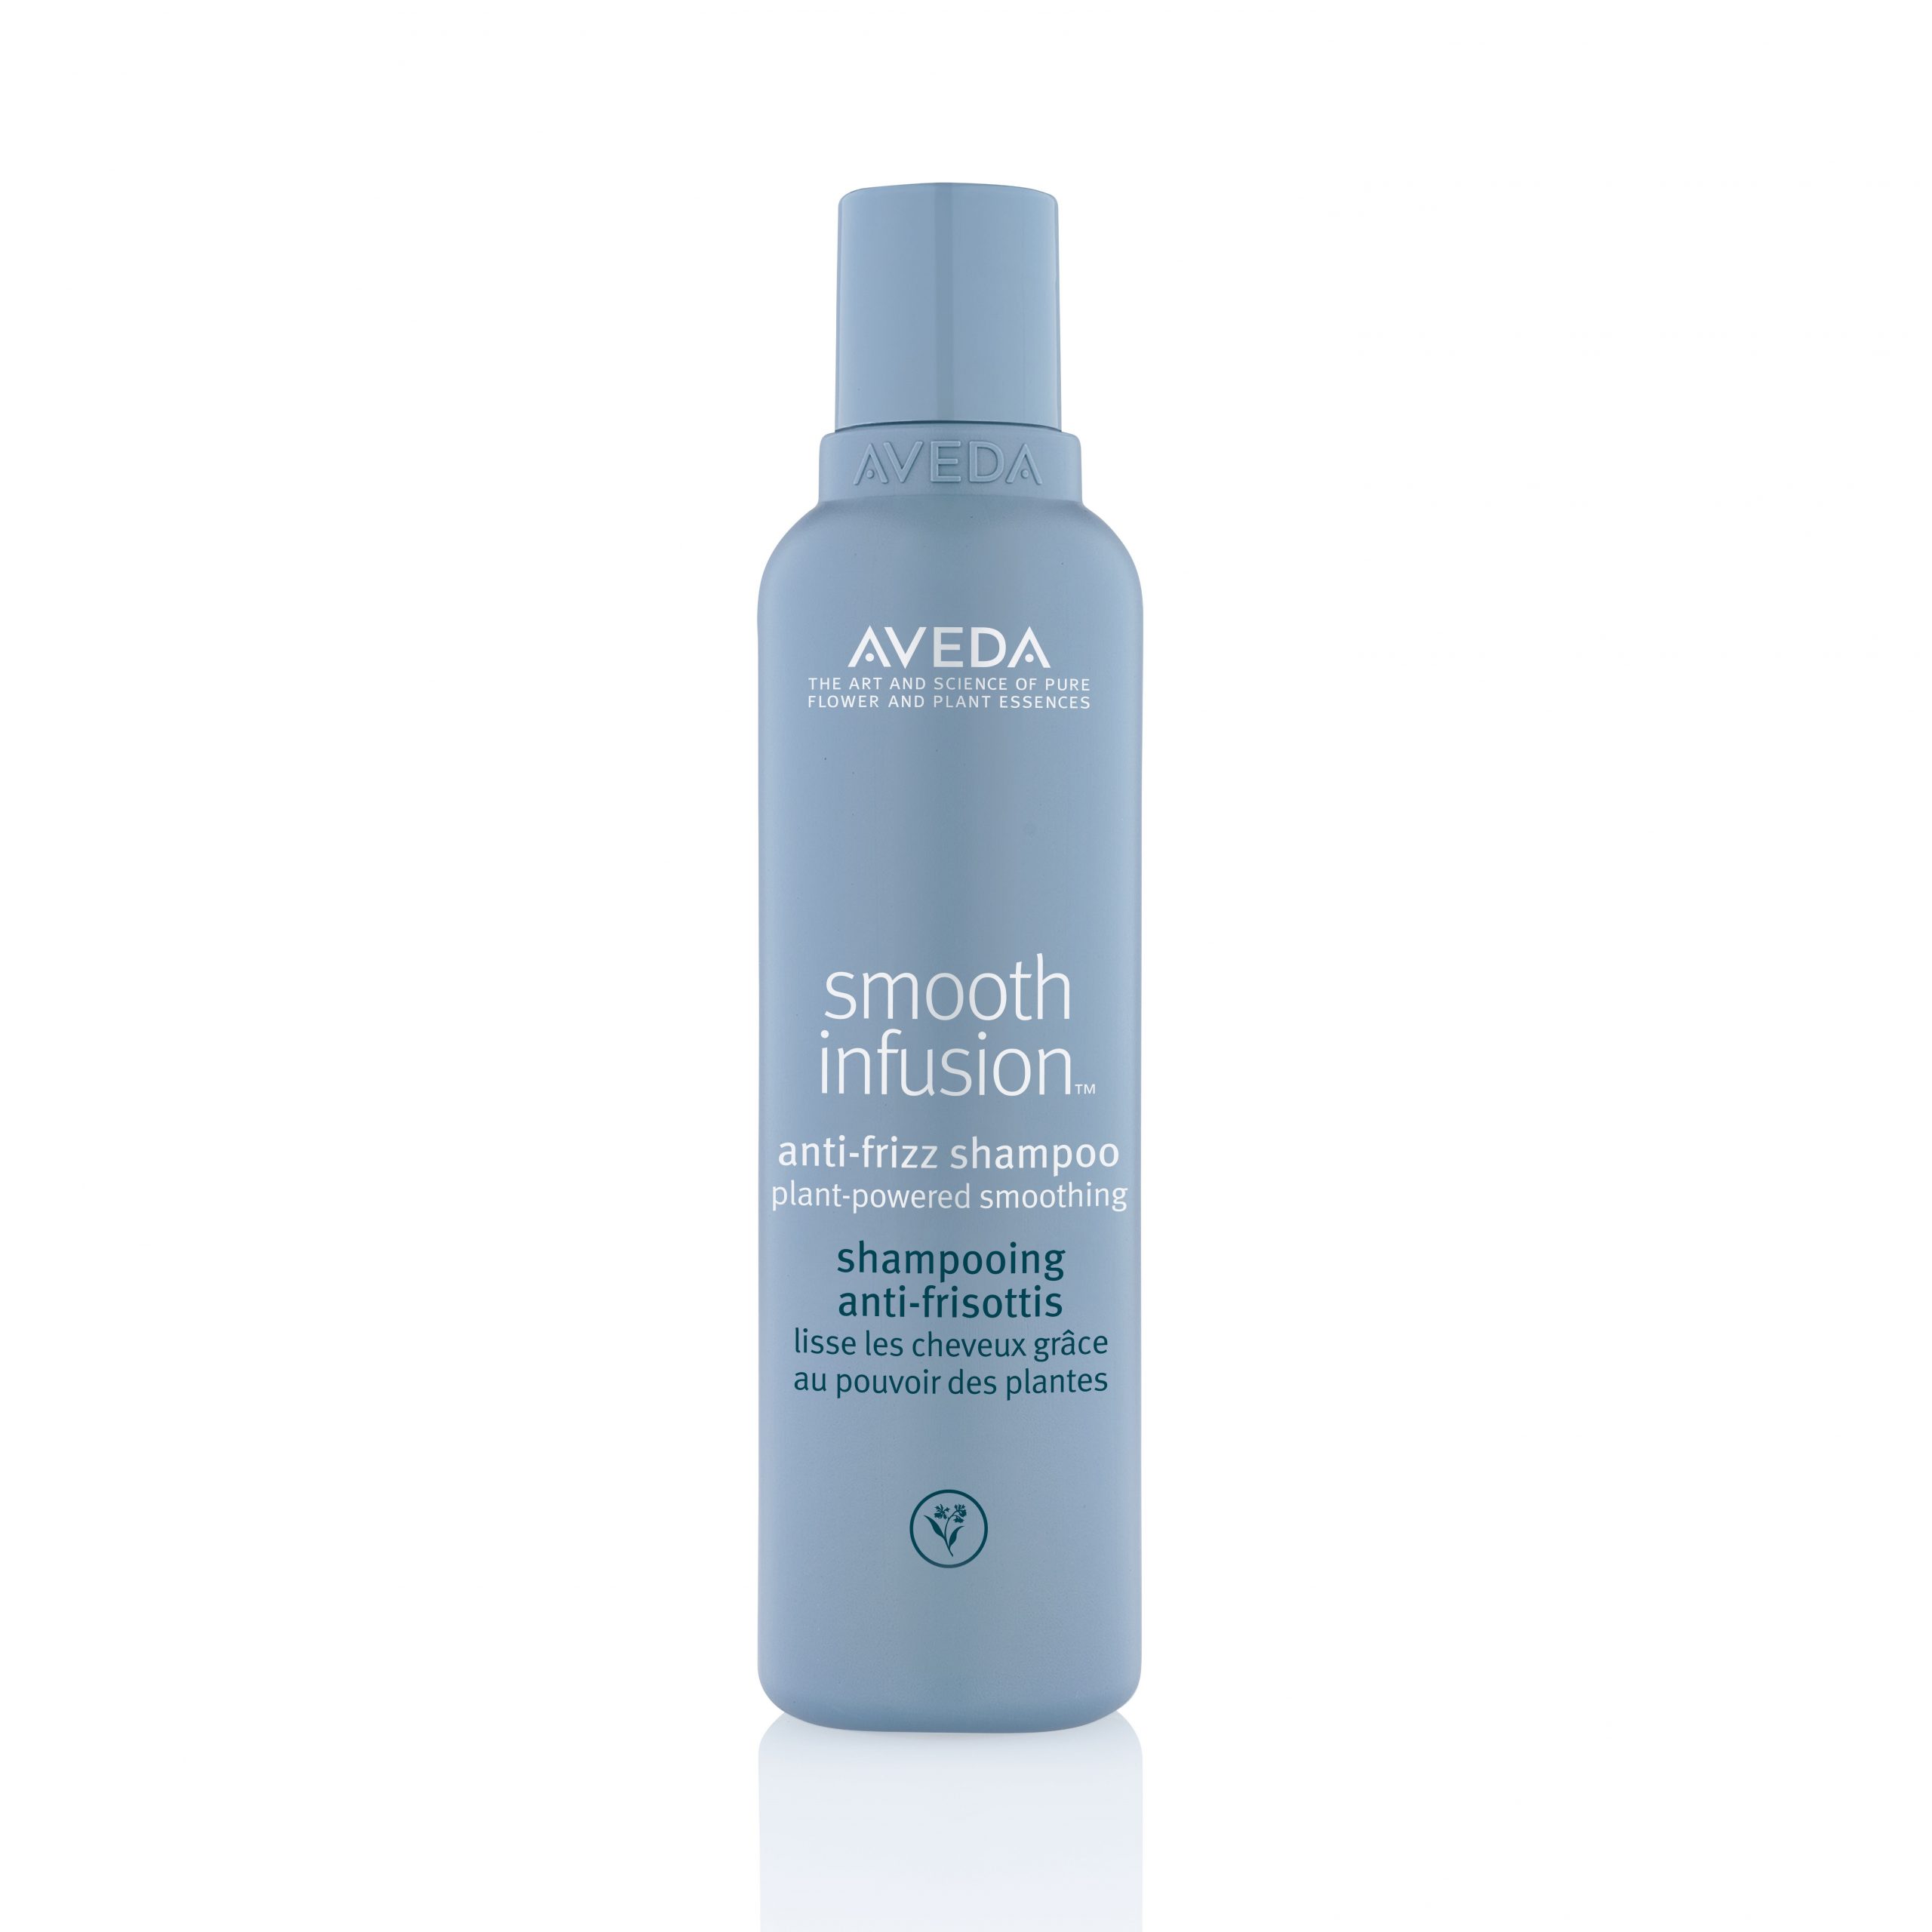 https://av-dashop.nl/wp-content/uploads/2022/07/Aveda-smooth-infusion-shampoo-scaled.jpg